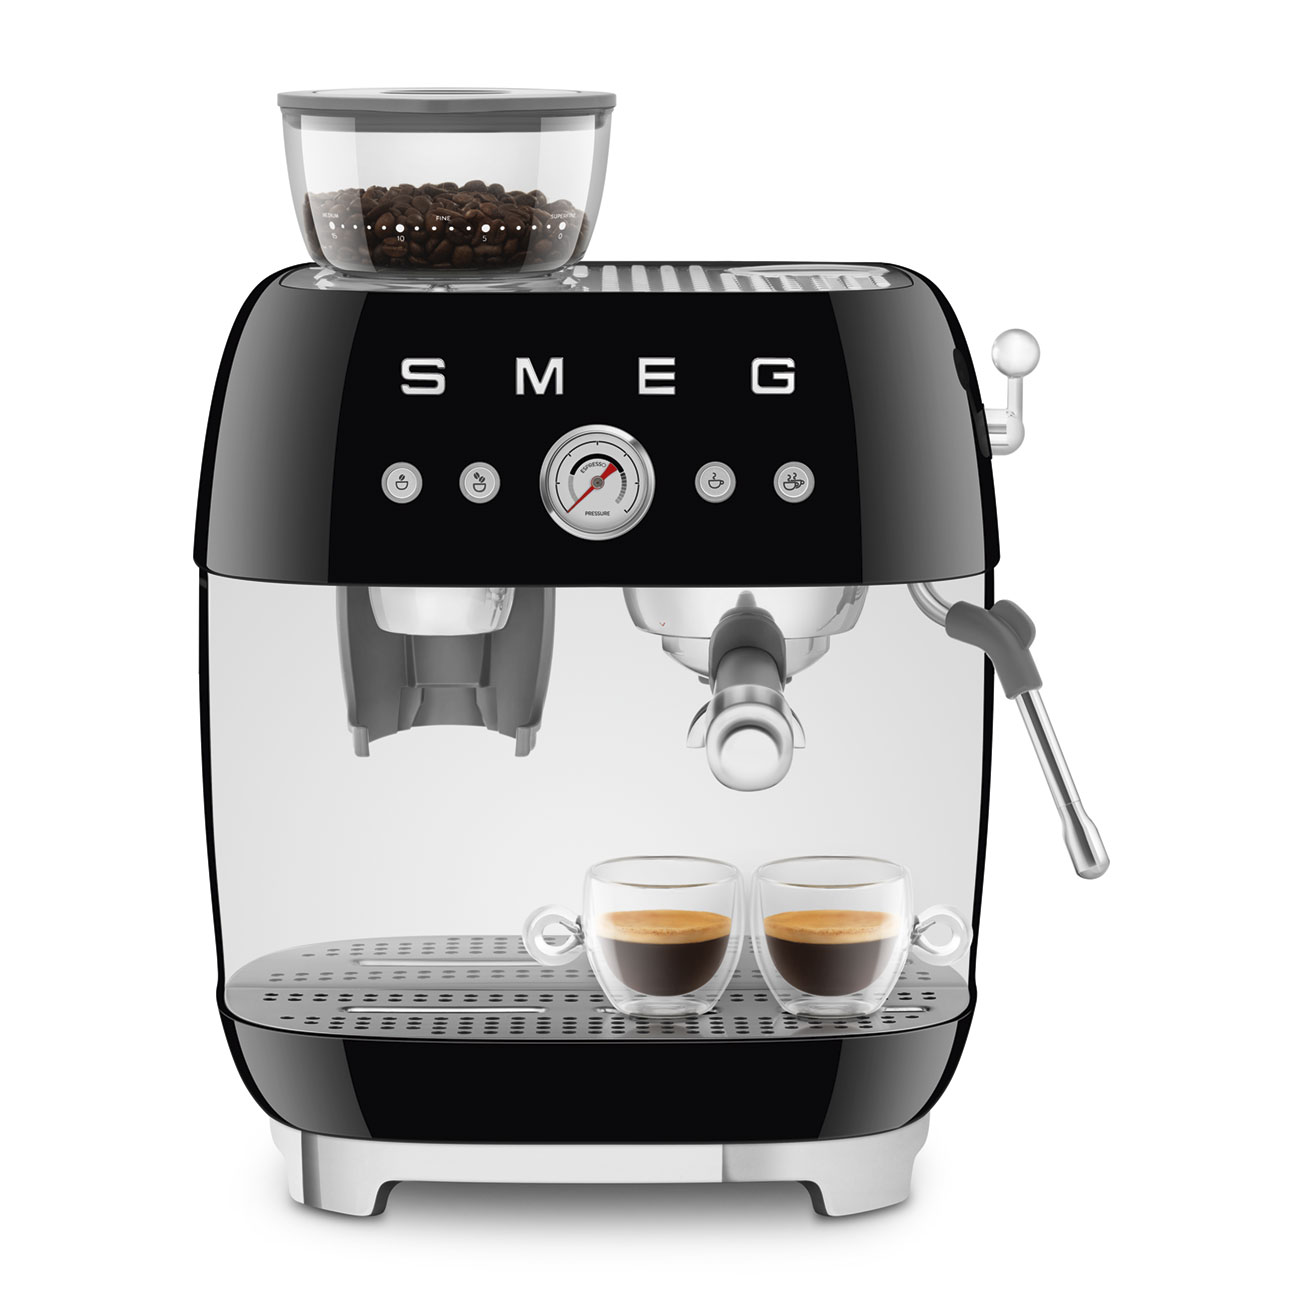 Smeg Black Espresso Manual Coffee Machine with Grinder_8